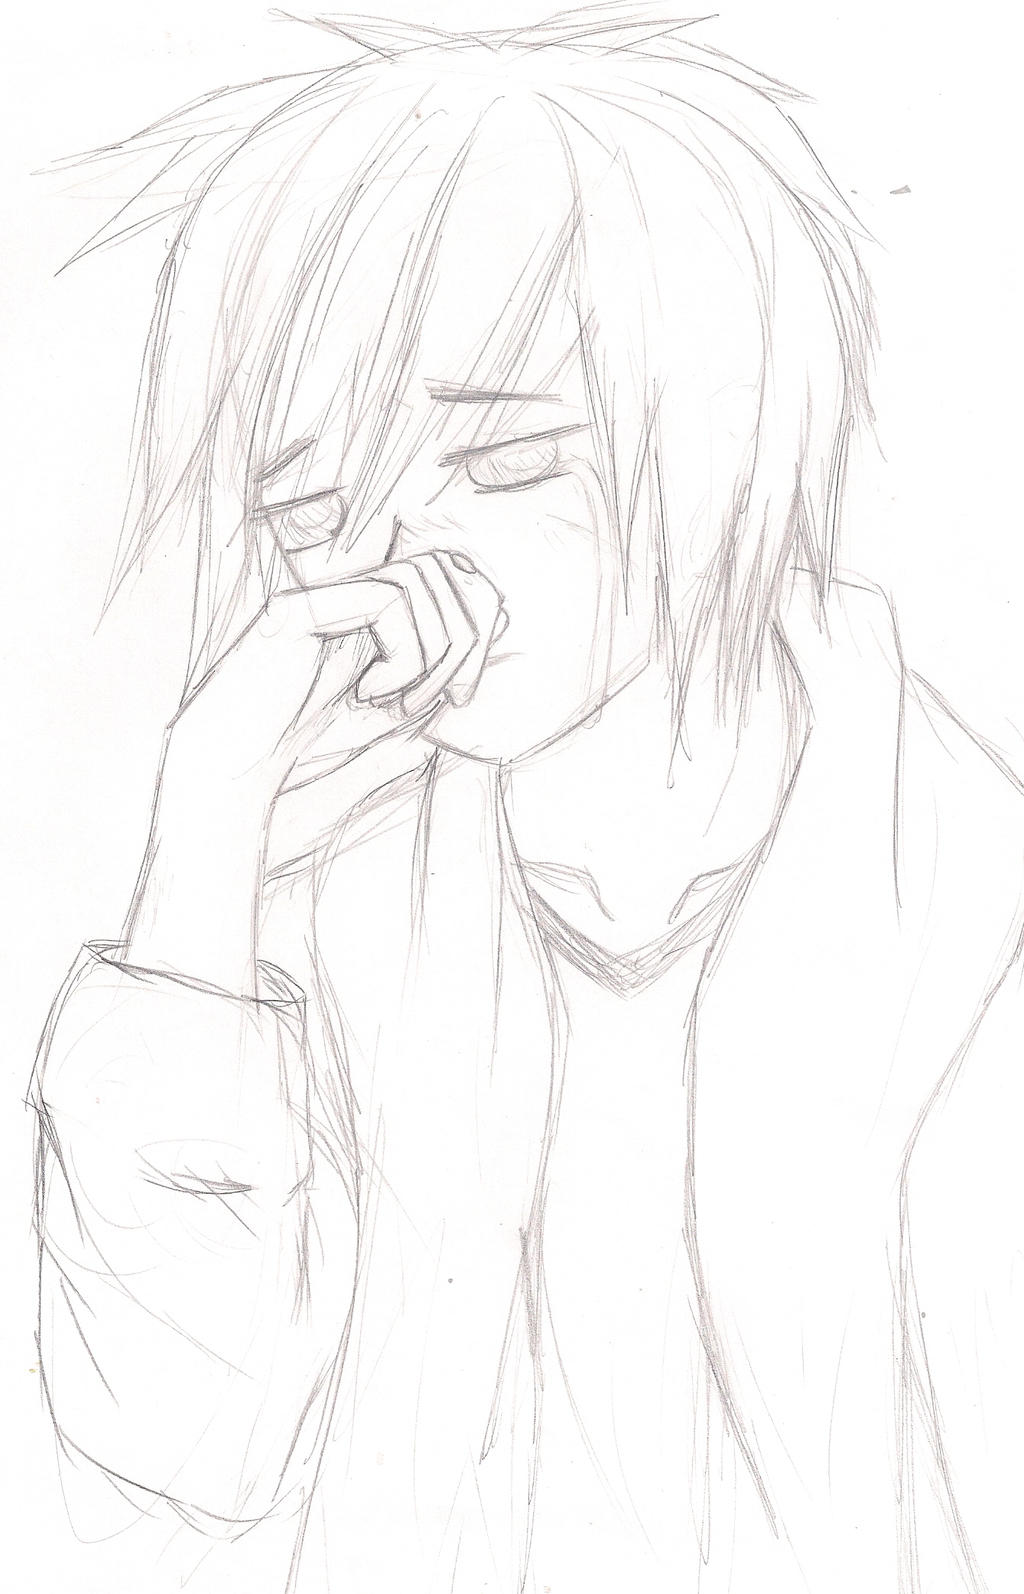 Anime Boy Crying by eternalsnow413 on DeviantArt